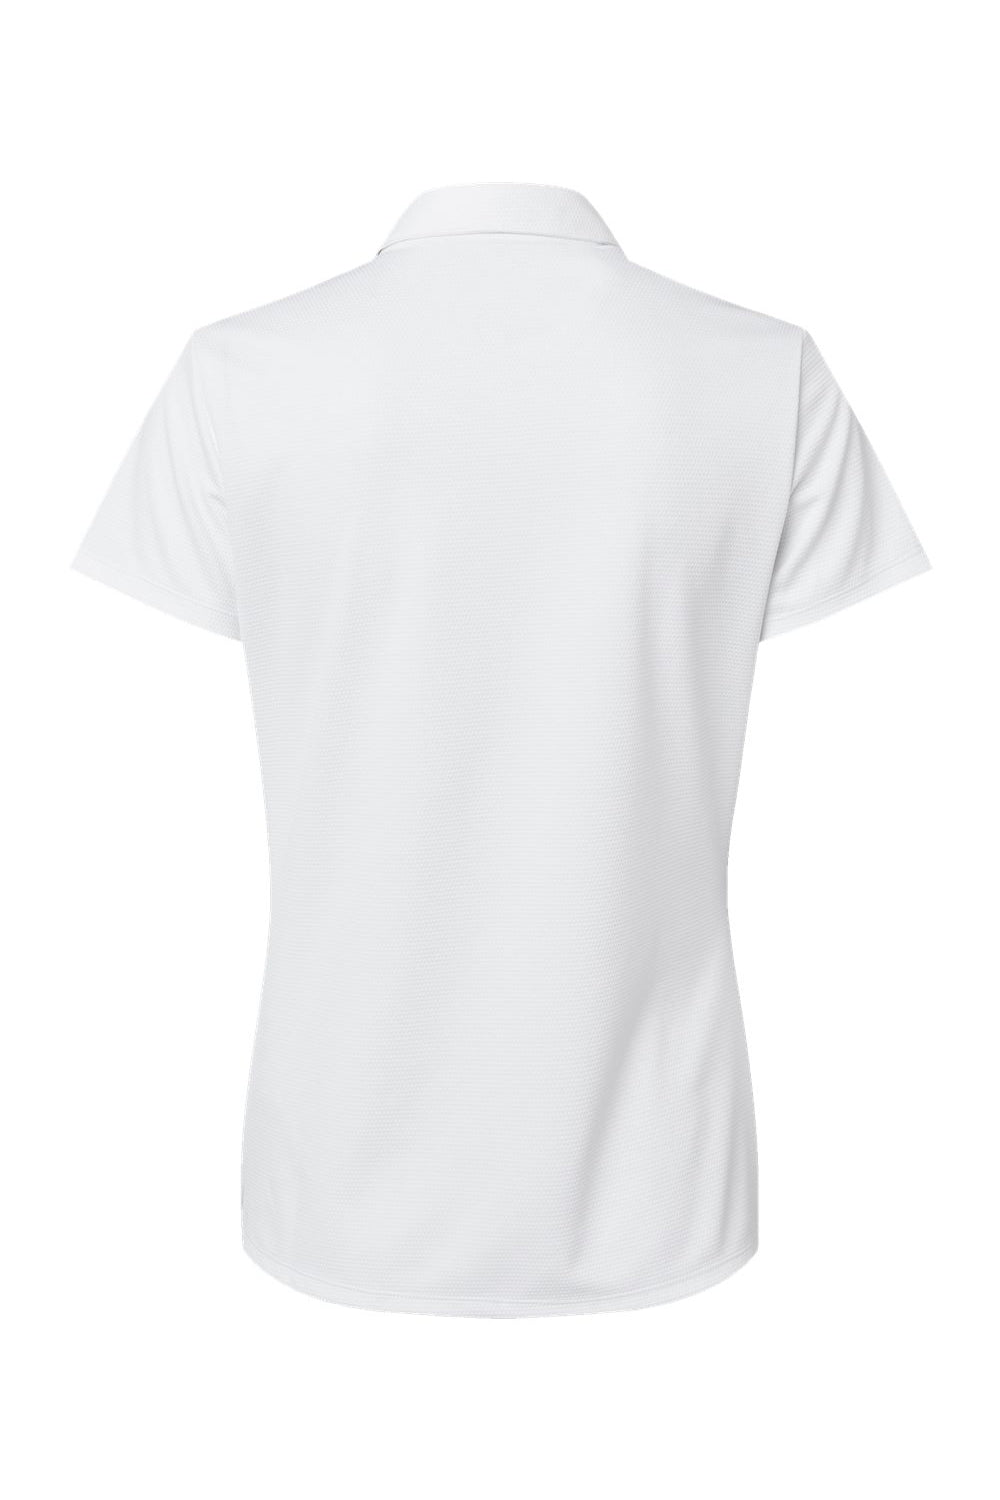 Adidas A581 Womens Micro Pique Short Sleeve Polo Shirt White Flat Back